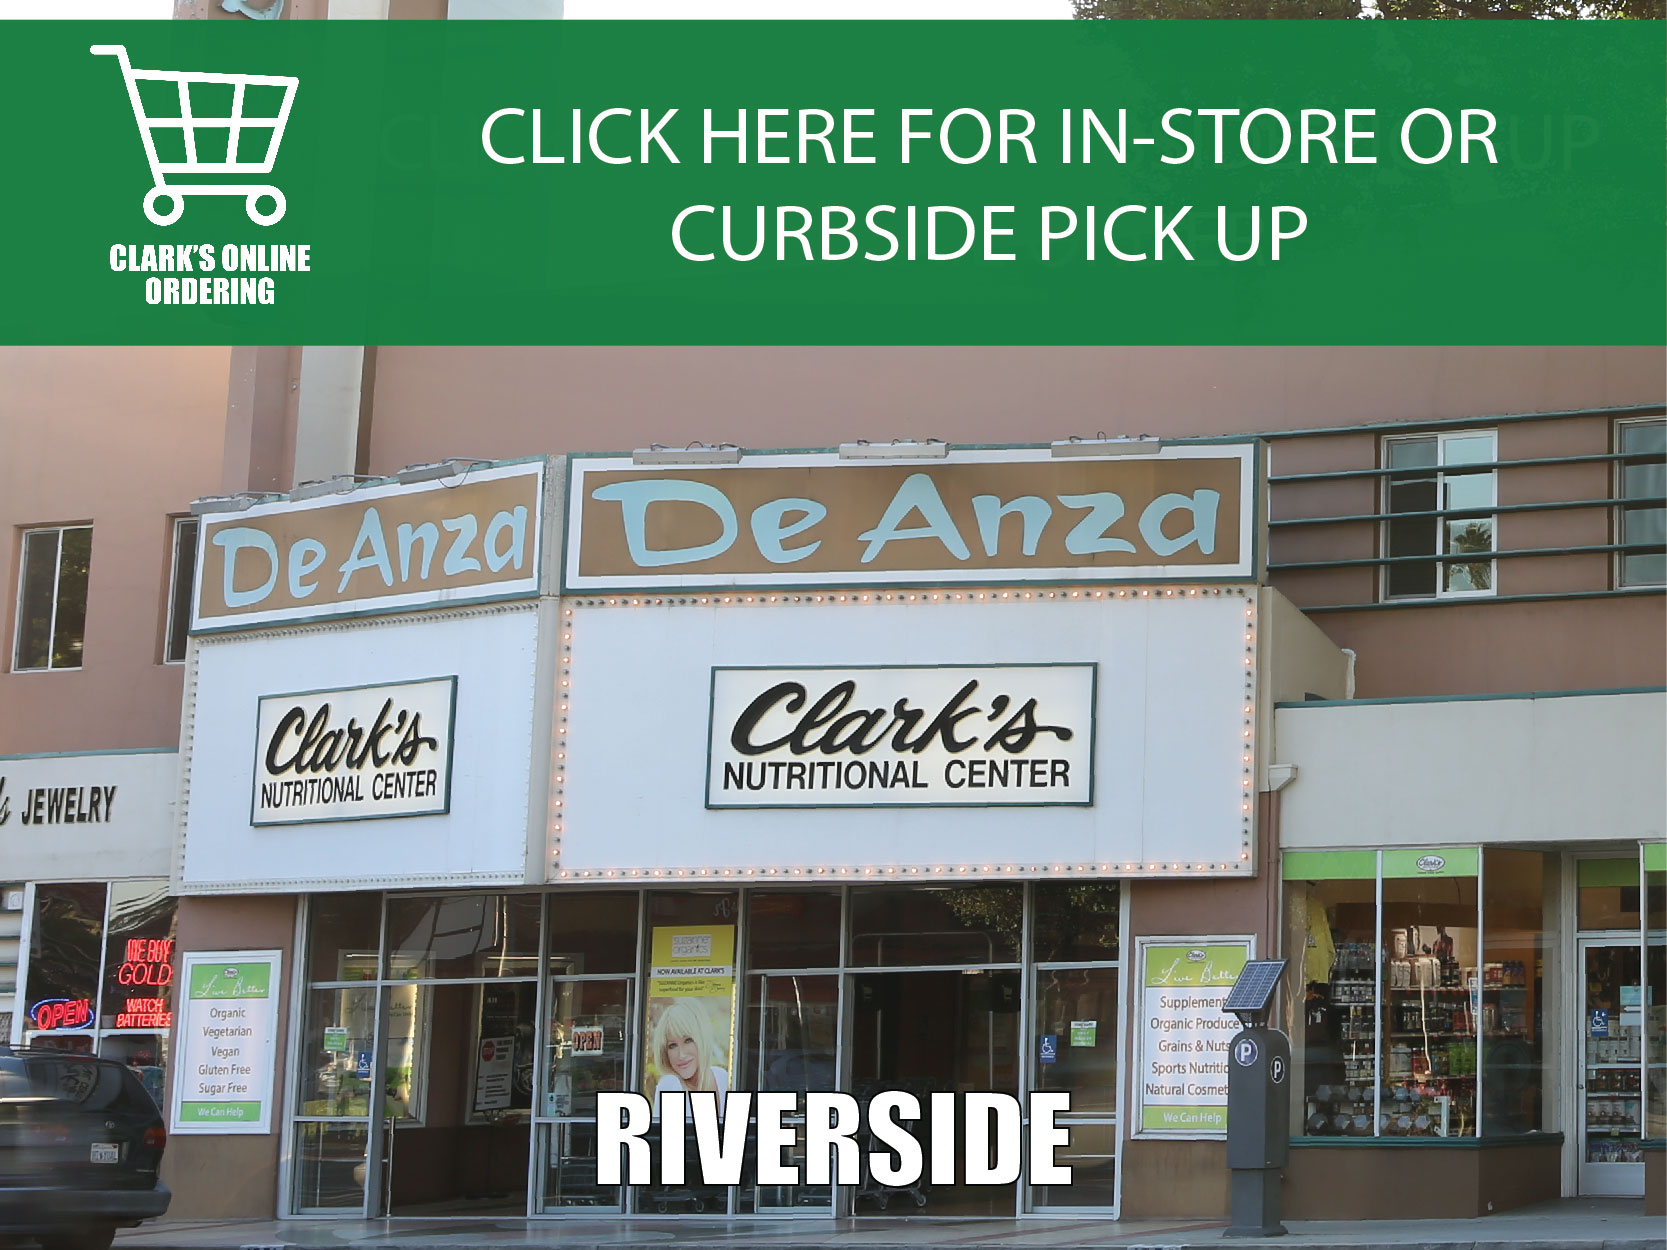 Shop our Riverside Store